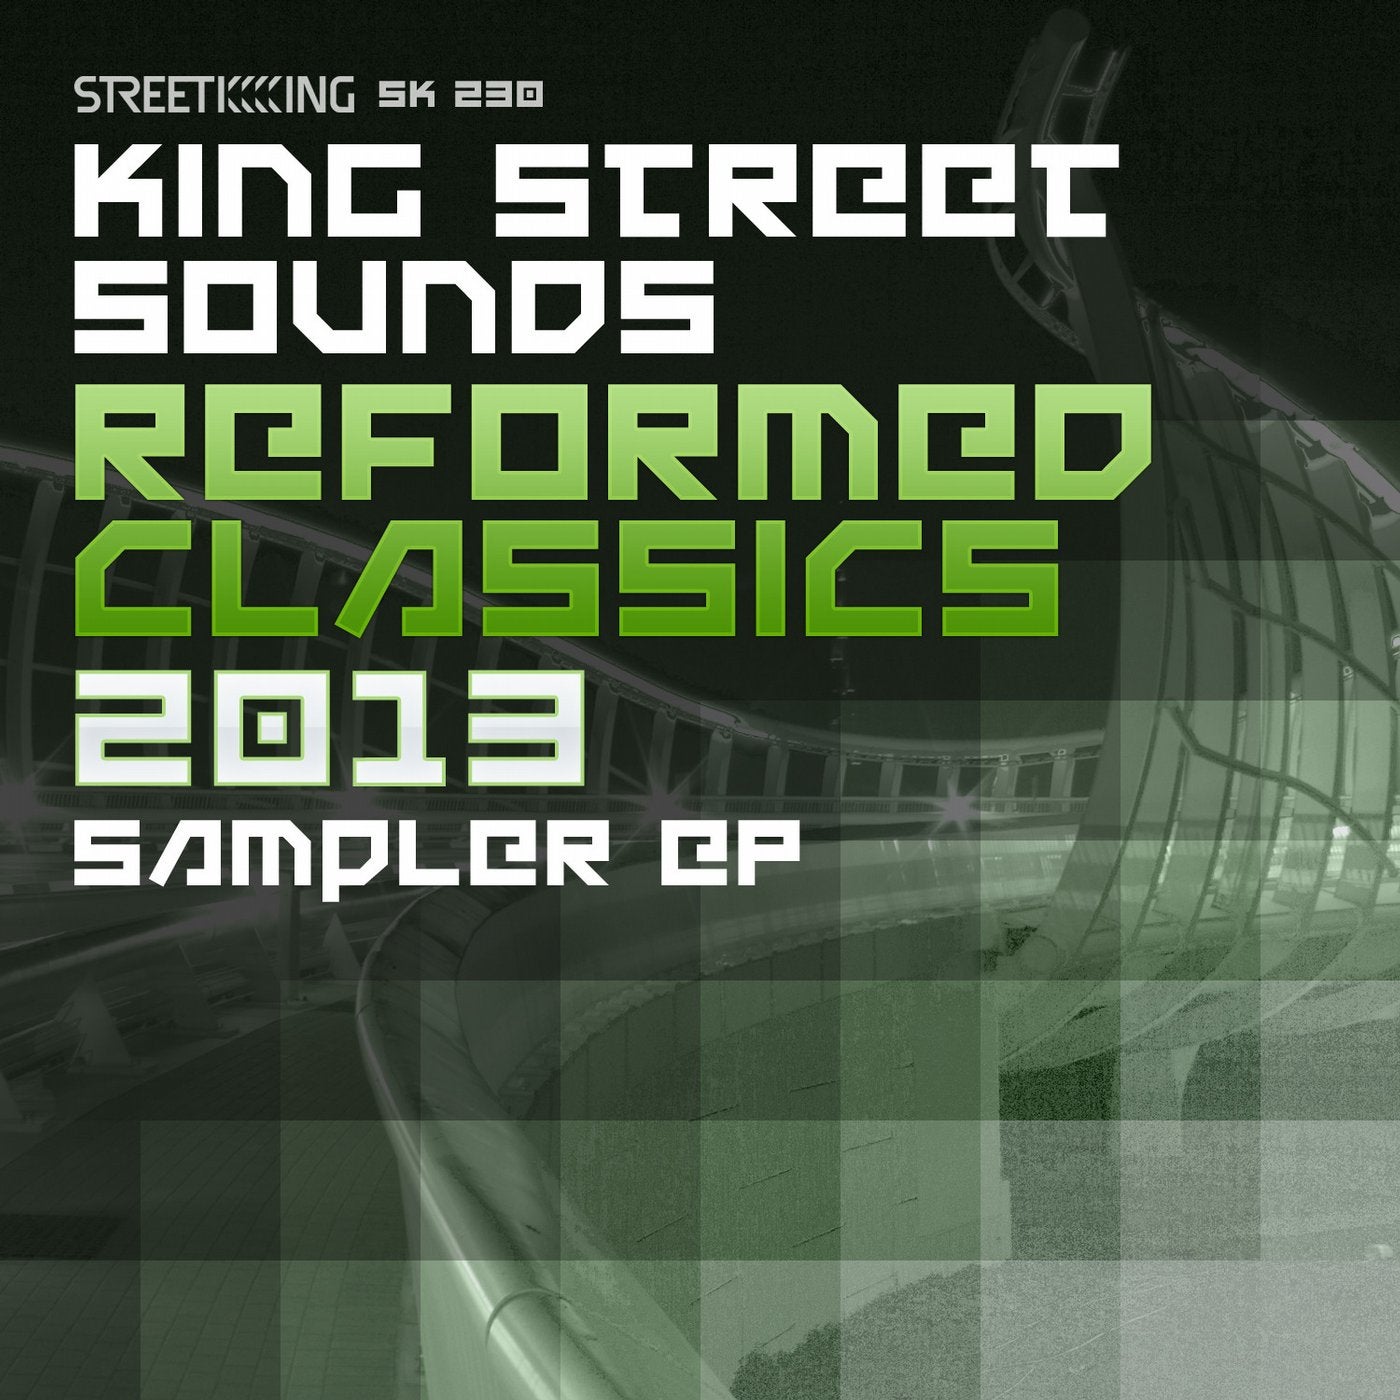 King Street Sounds Reformed Classics 2013 Sampler EP